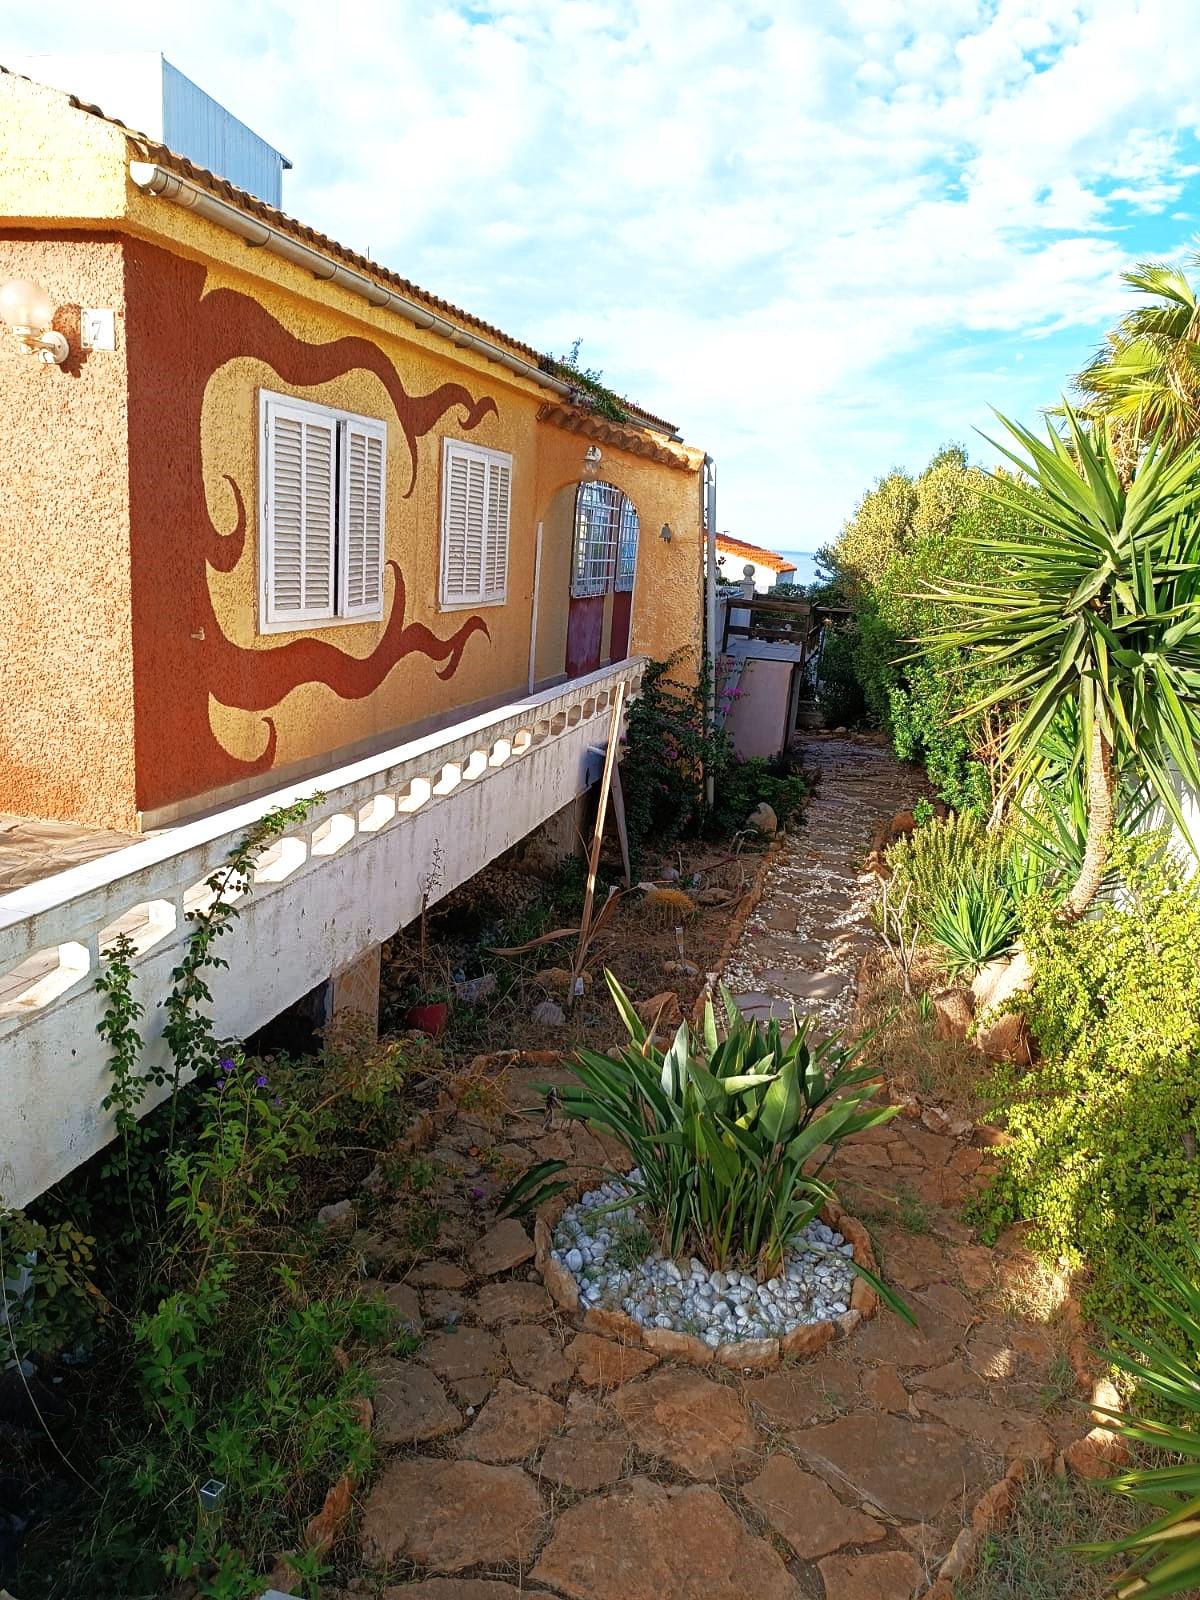 Verkoop van kleine villa in El Ejido